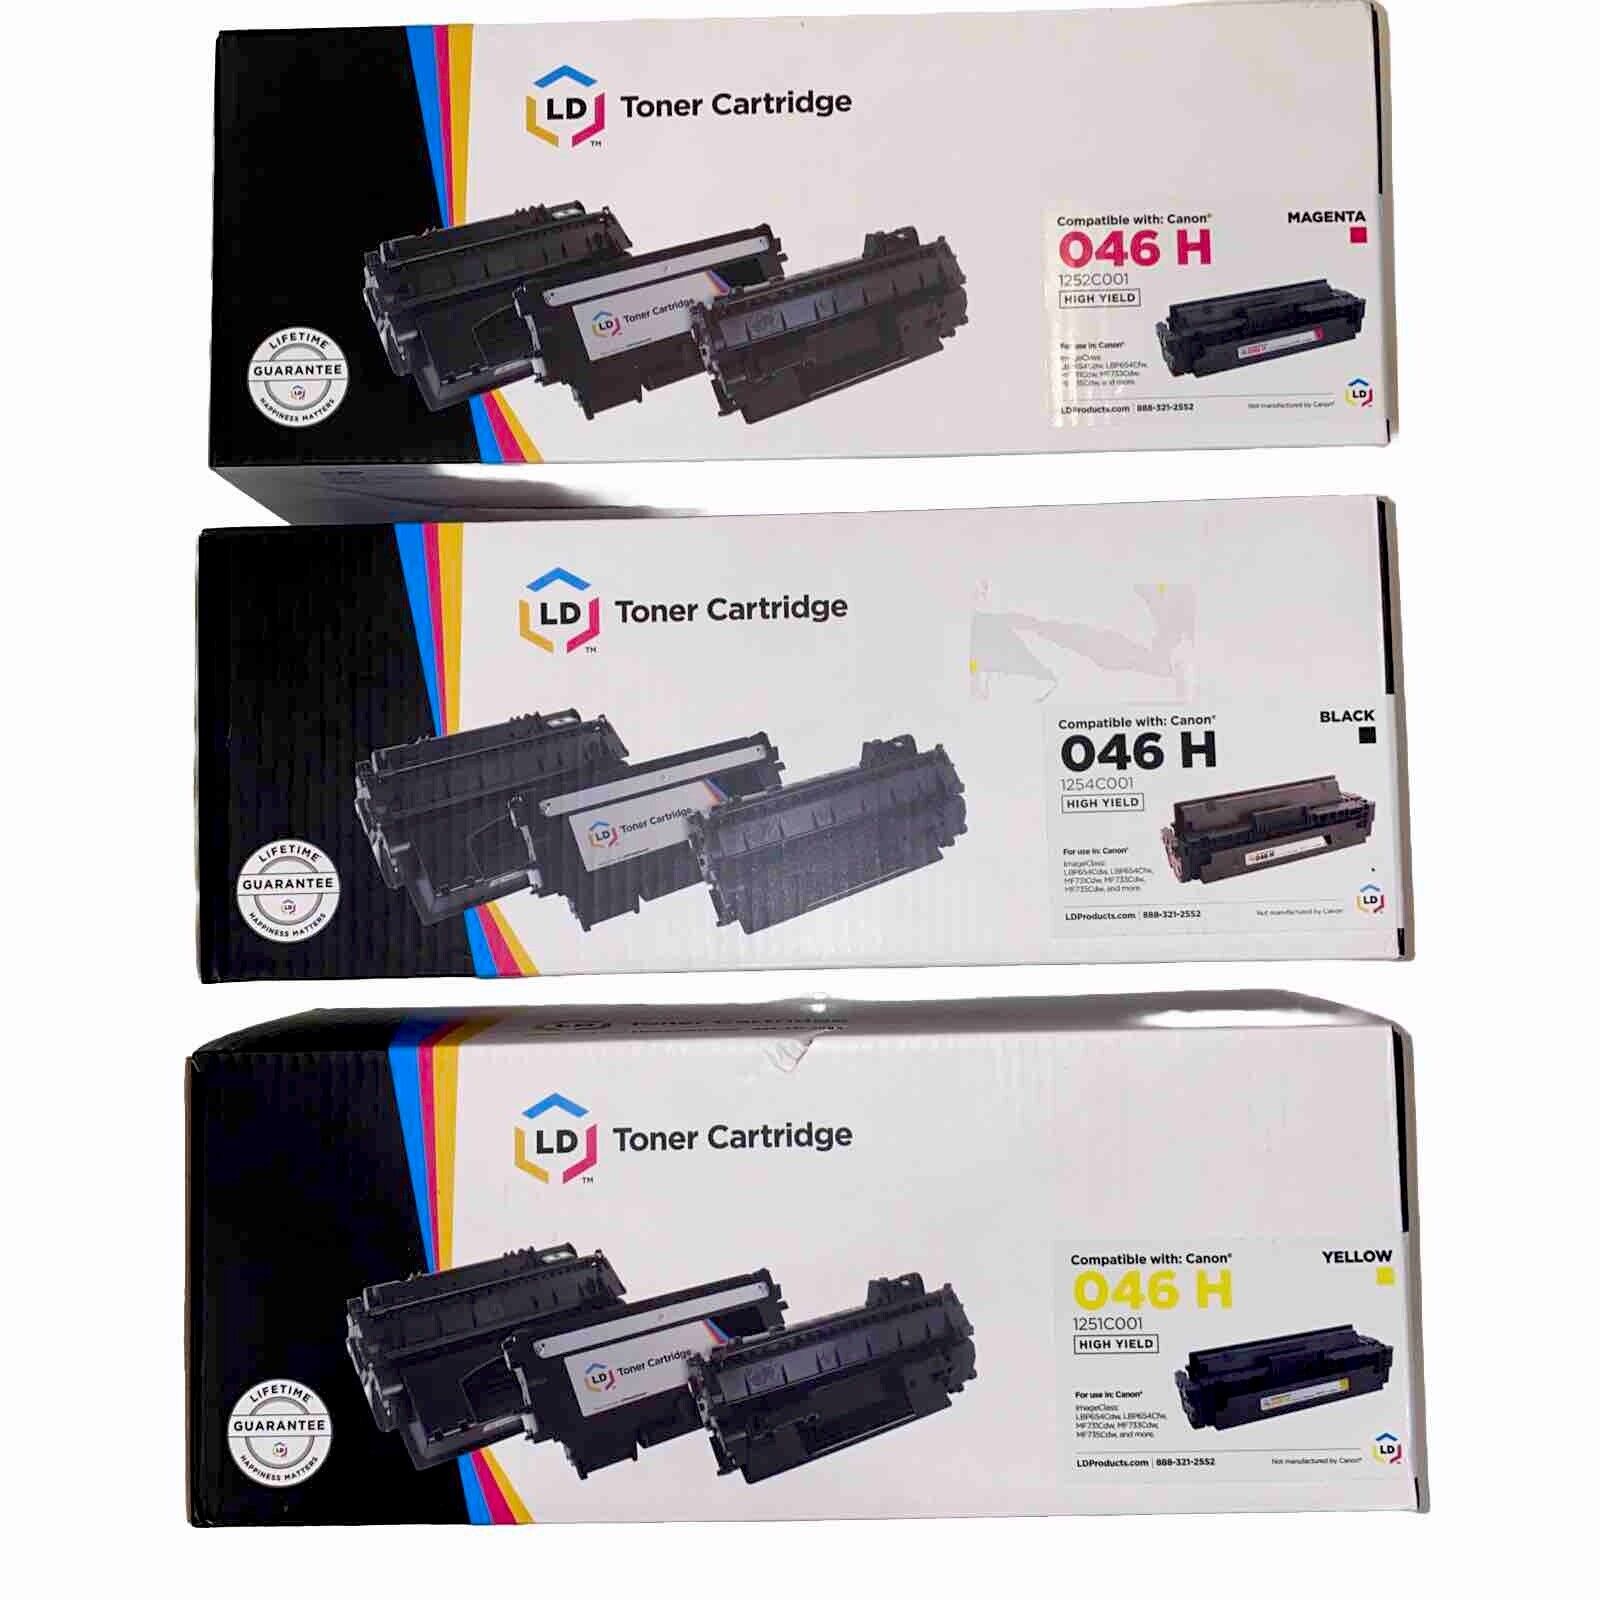 LD Cartridge Toner 3 Pk Lot - Black (1) Magenta (1) Yellow (1) New In Box